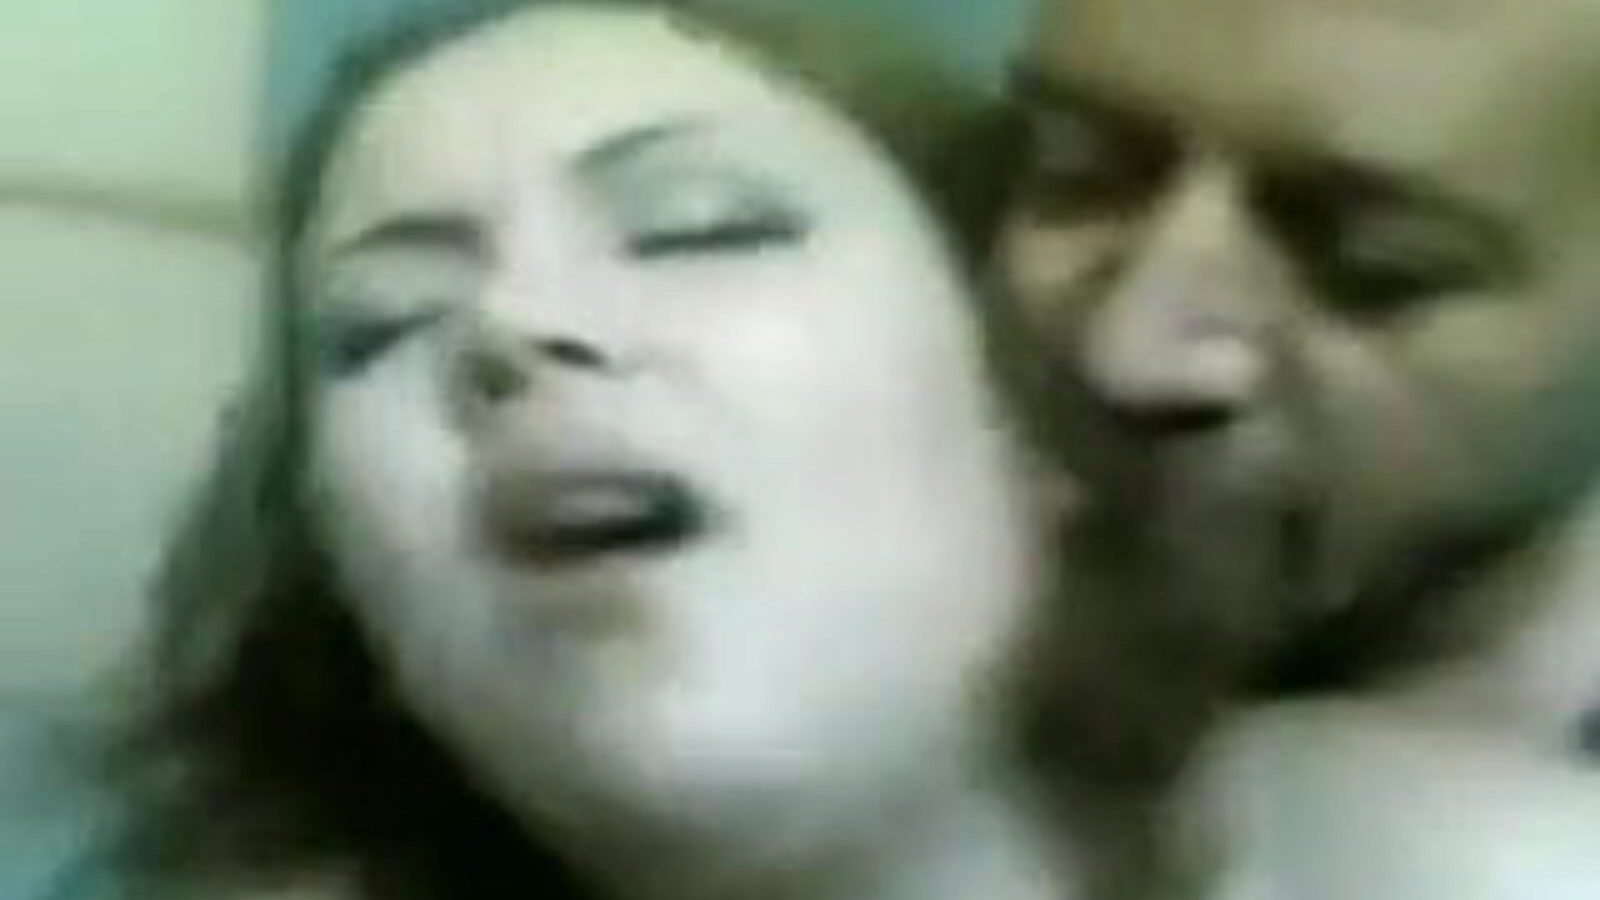 madame lily: bedava altmış dokuz porno video 07 - xhamster izle madame lily tüp sevişme klibi ücretsiz-all-for-all on xhamster, üstün mısır arap bevy, 69 ve büyük göt porno video bölümleri